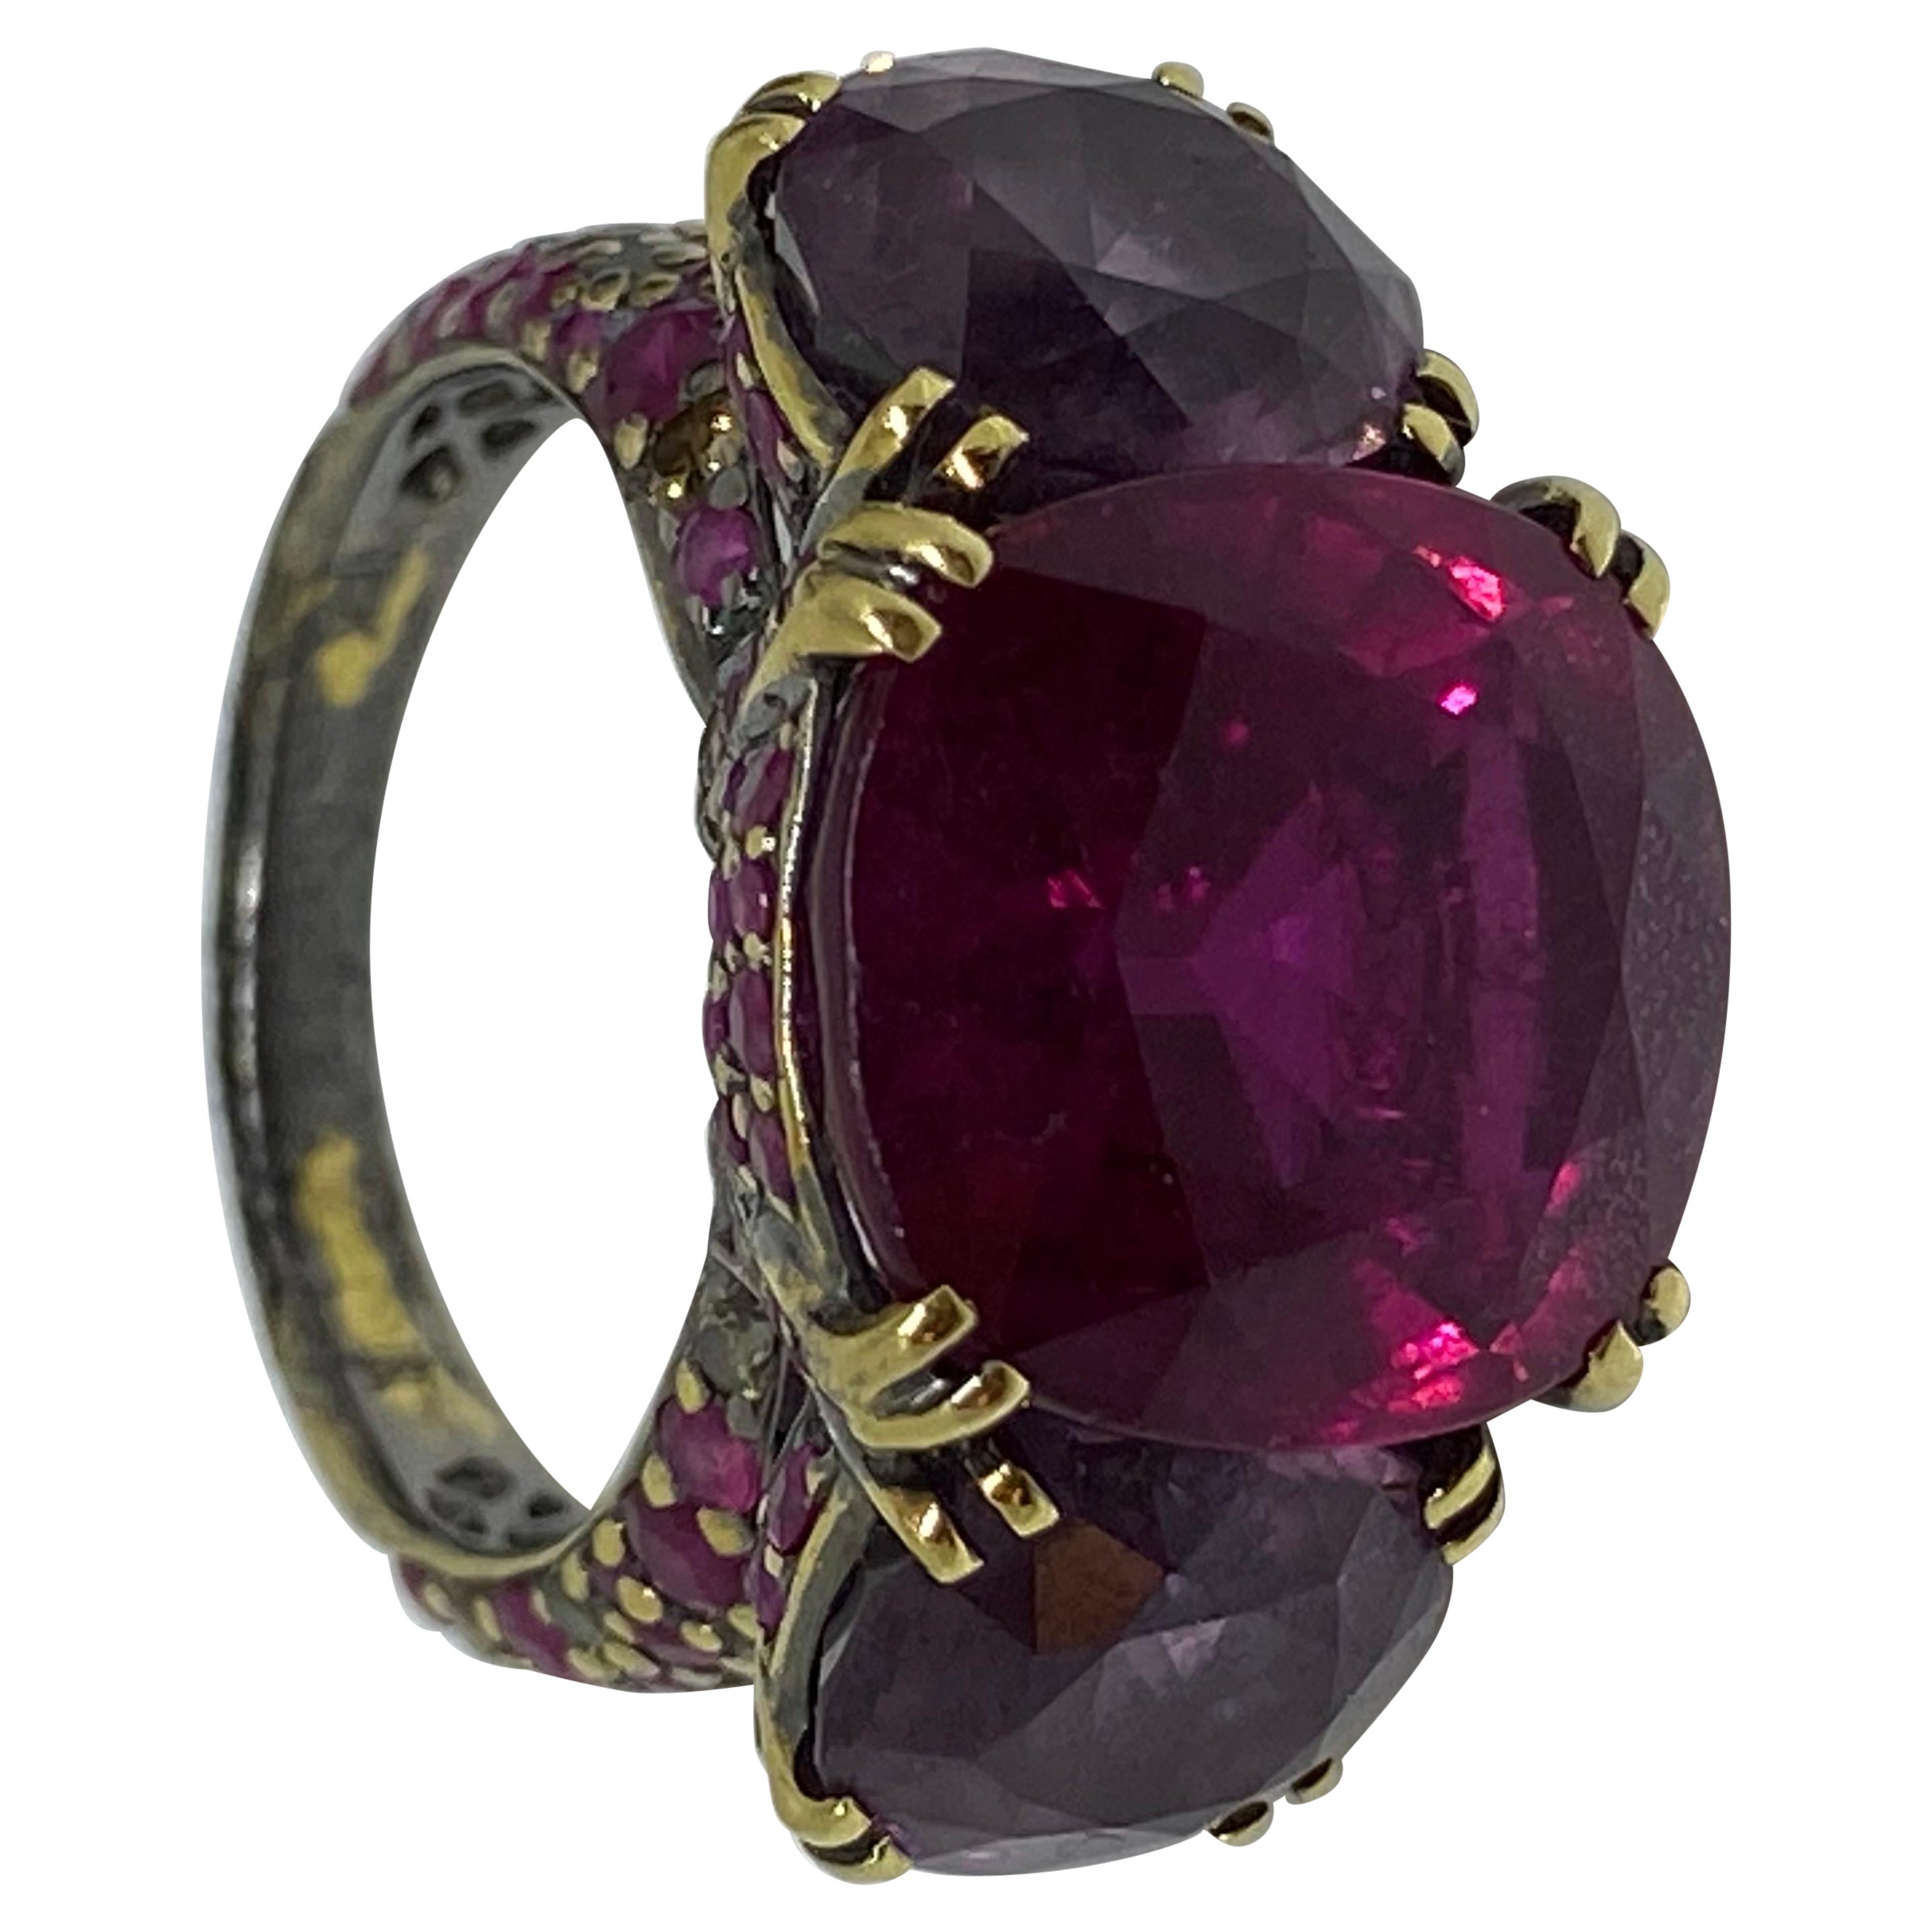 JOHN HARDY 18K Diamond/Sapphire/Tourmaline/Spinel Cinta Cocktail Ring Size: 6.5